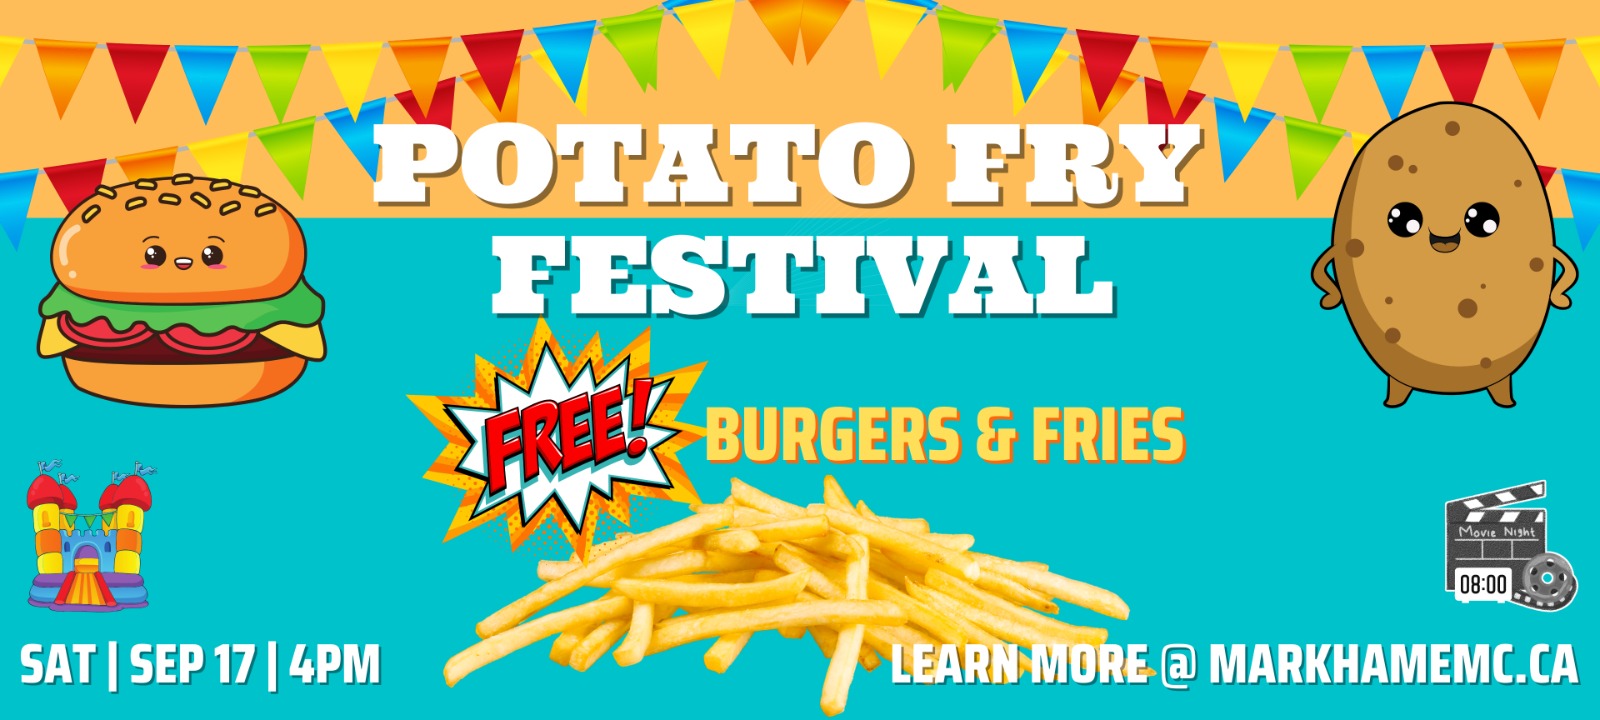 Potato Fry Festival